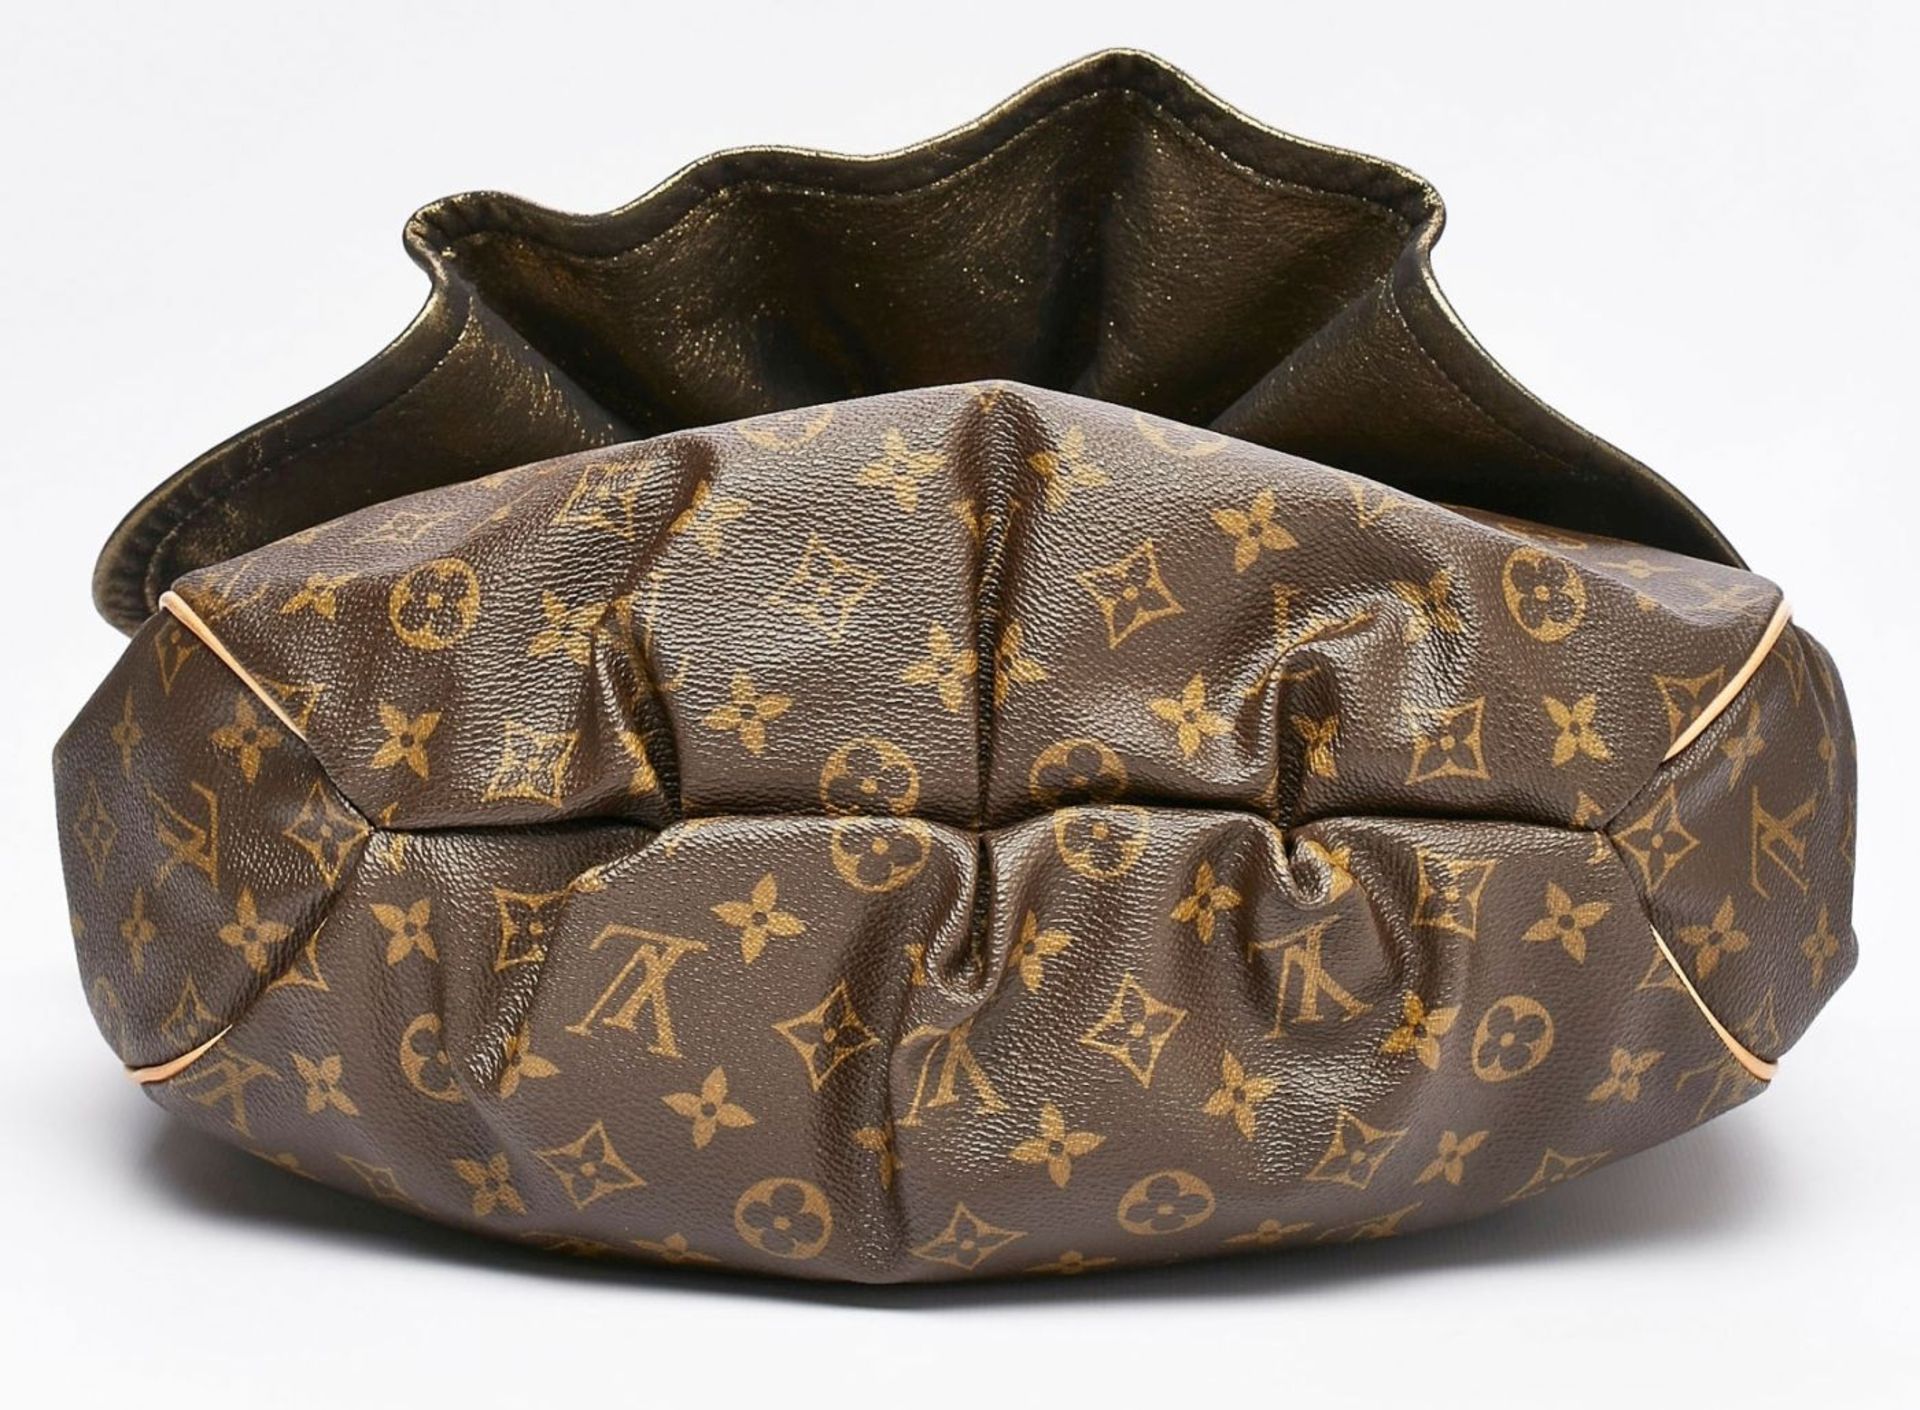 Handtasche "Kalahari GM", Louis Vuitton 2009. - Bild 3 aus 3